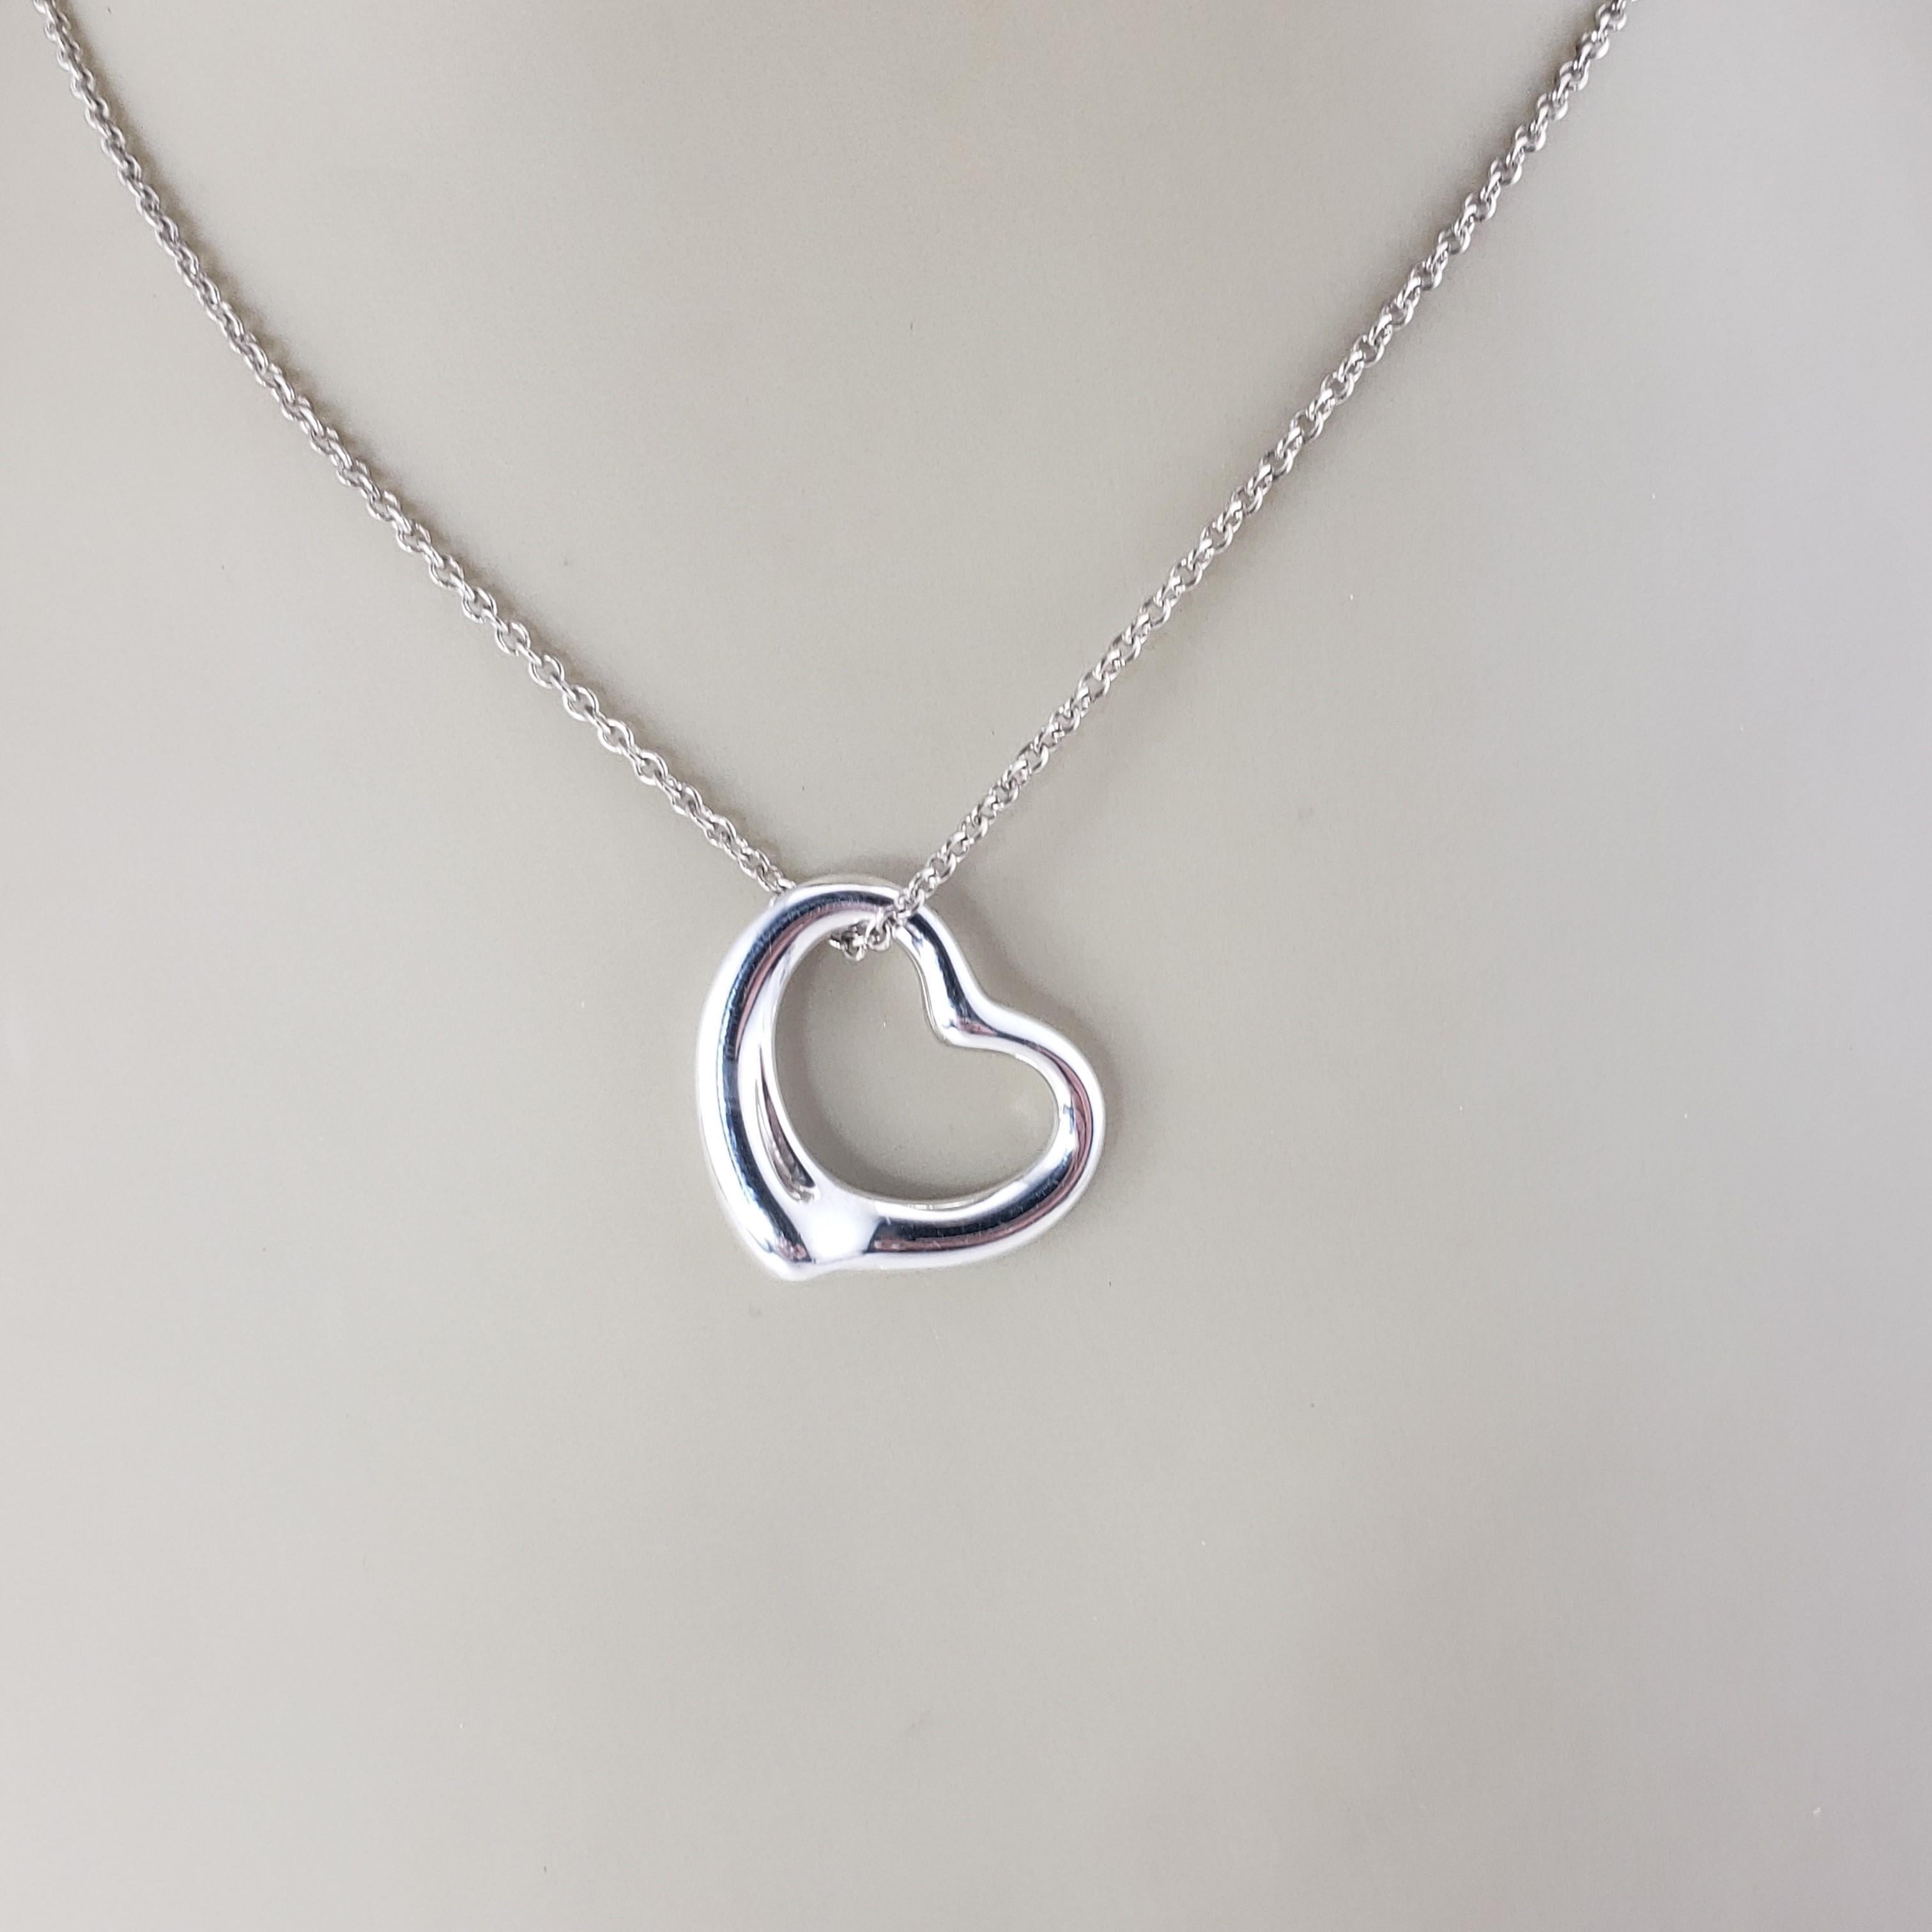 Tiffany & Co. Elsa Peretti Sterling Silver Open Heart Necklace #16845 4